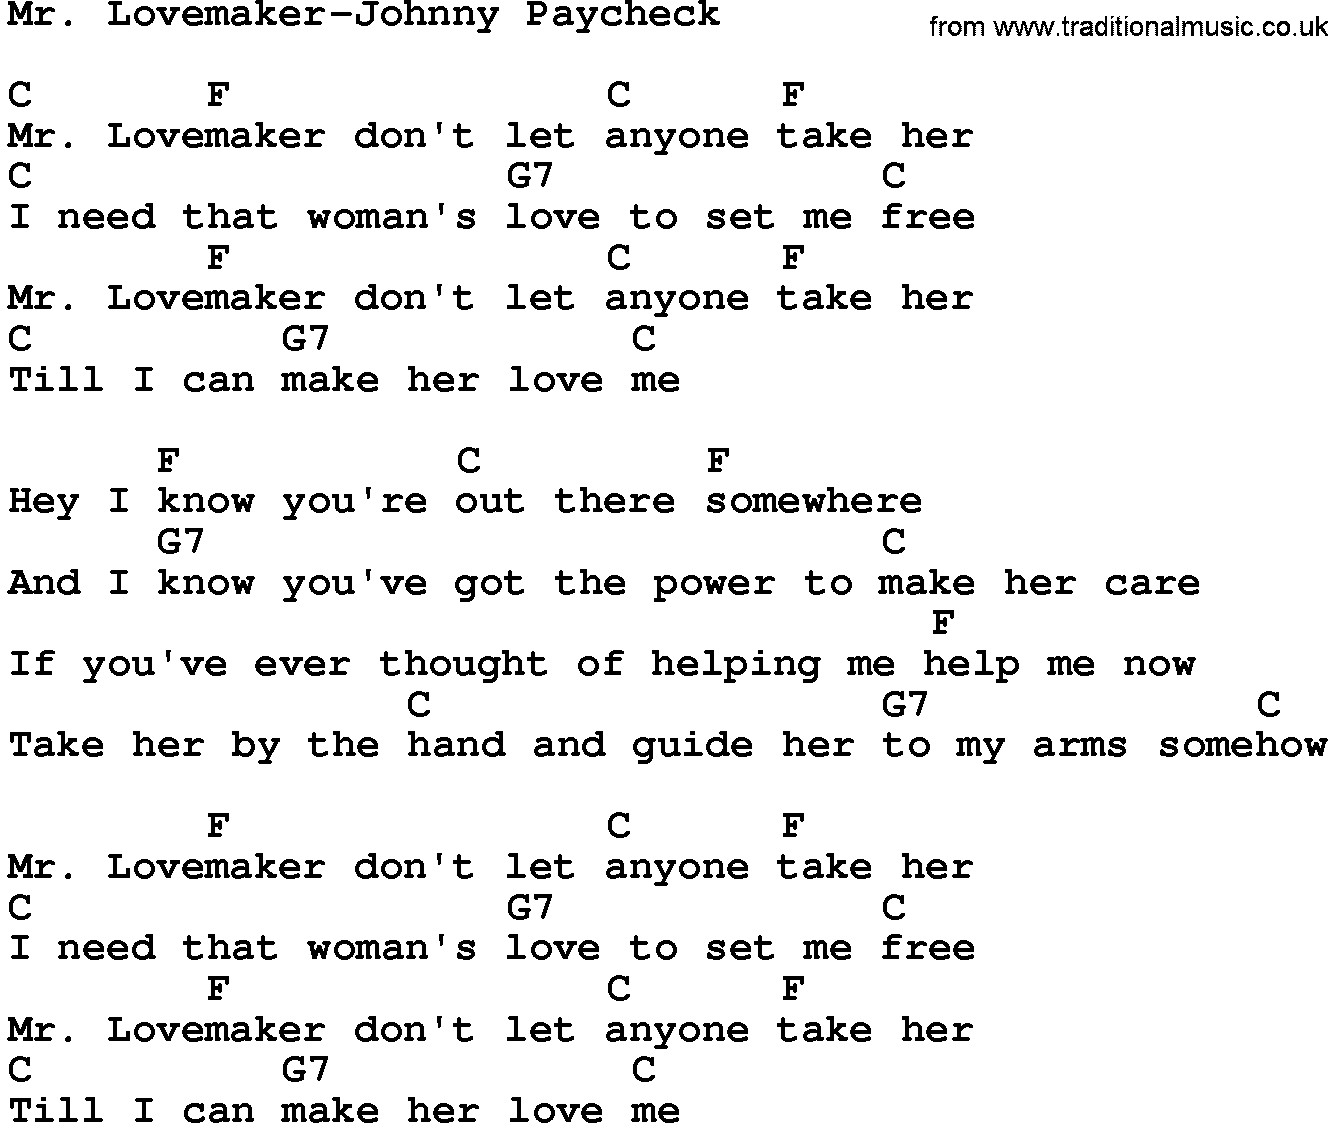 Country music song: Mr Lovemaker-Johnny Paycheck lyrics and chords